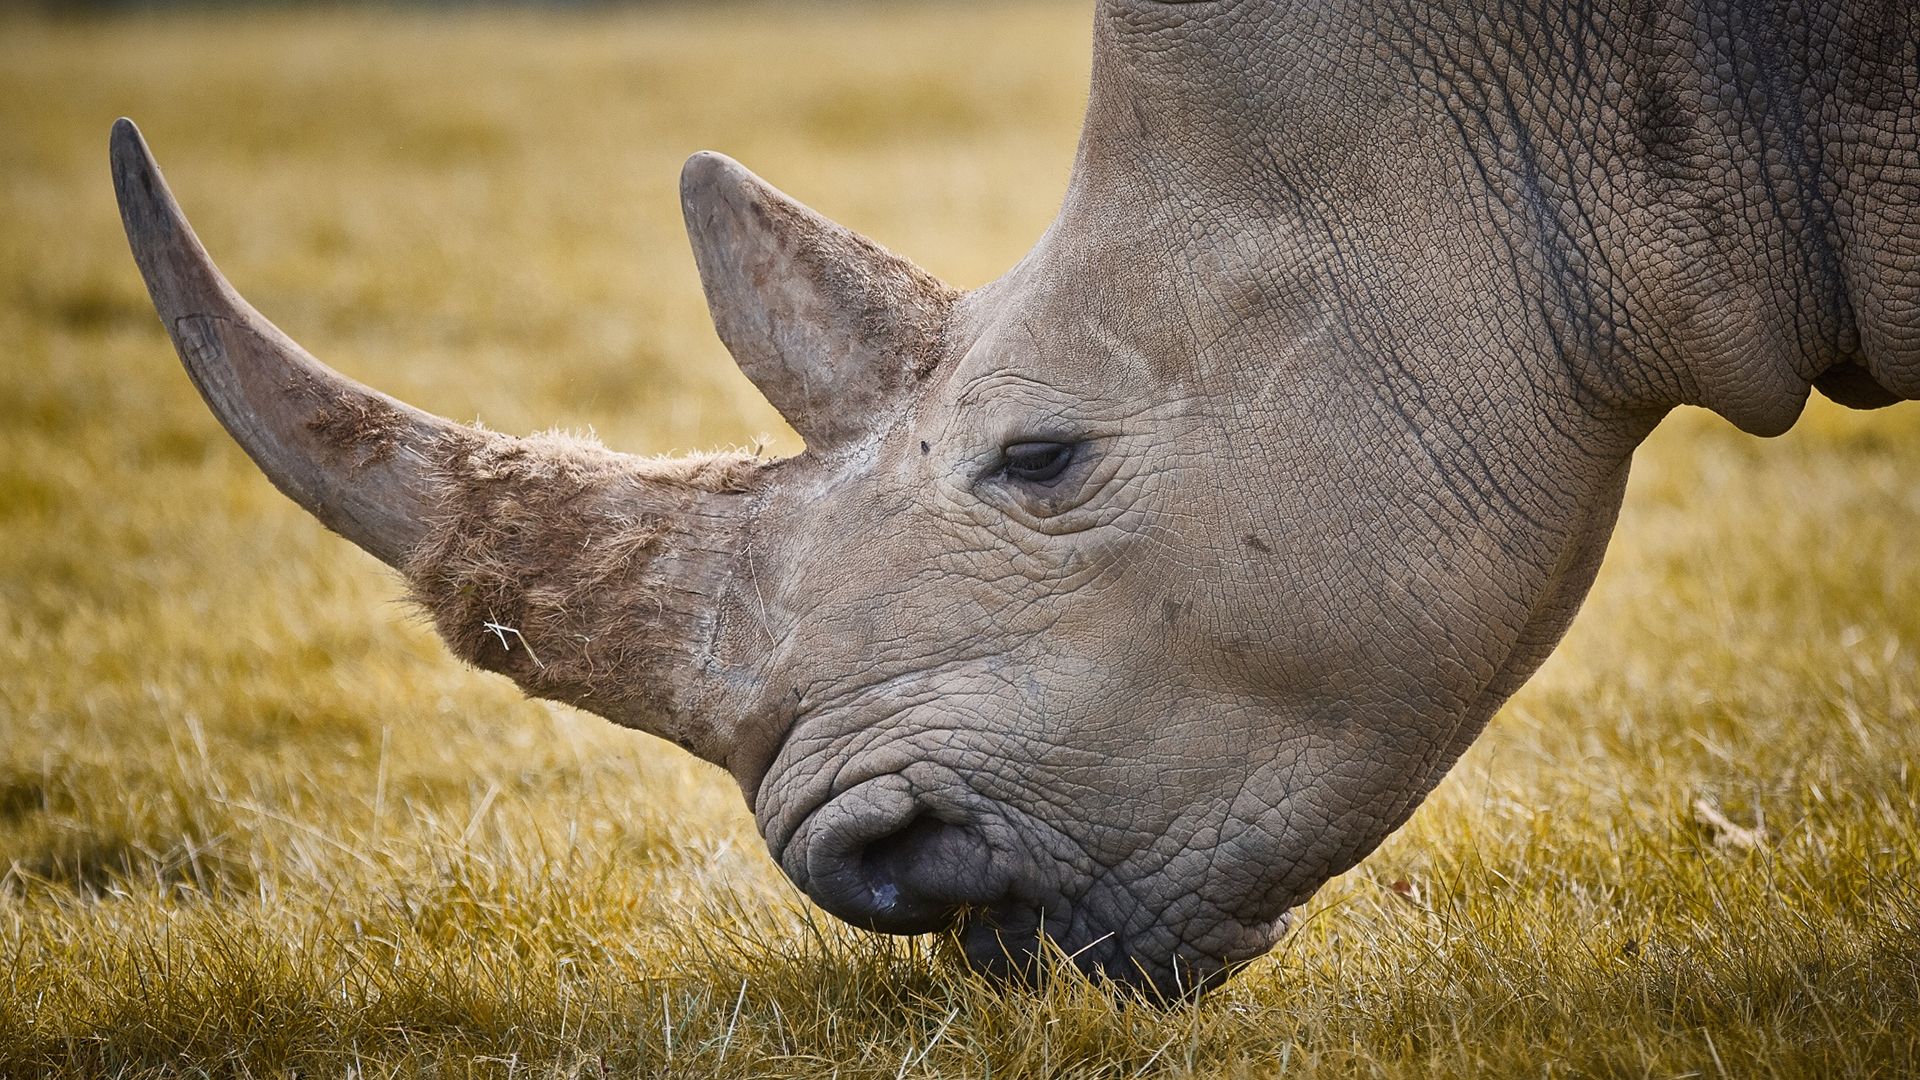 Rhino HD Wallpaper Free Download Amazing Animal Wallpaper